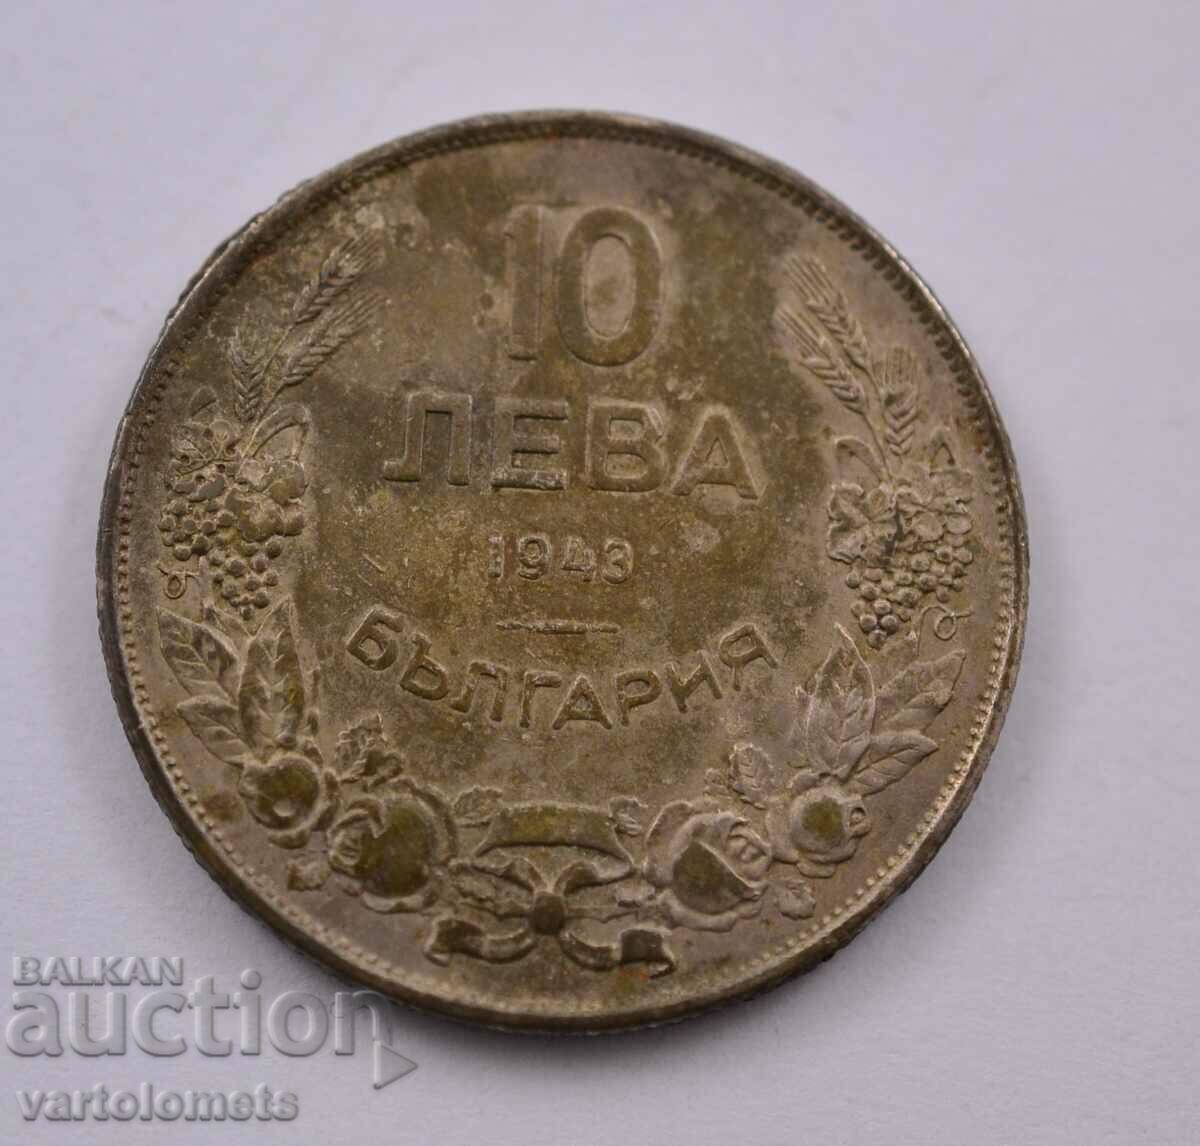 10 leva 1943 - Bulgaria